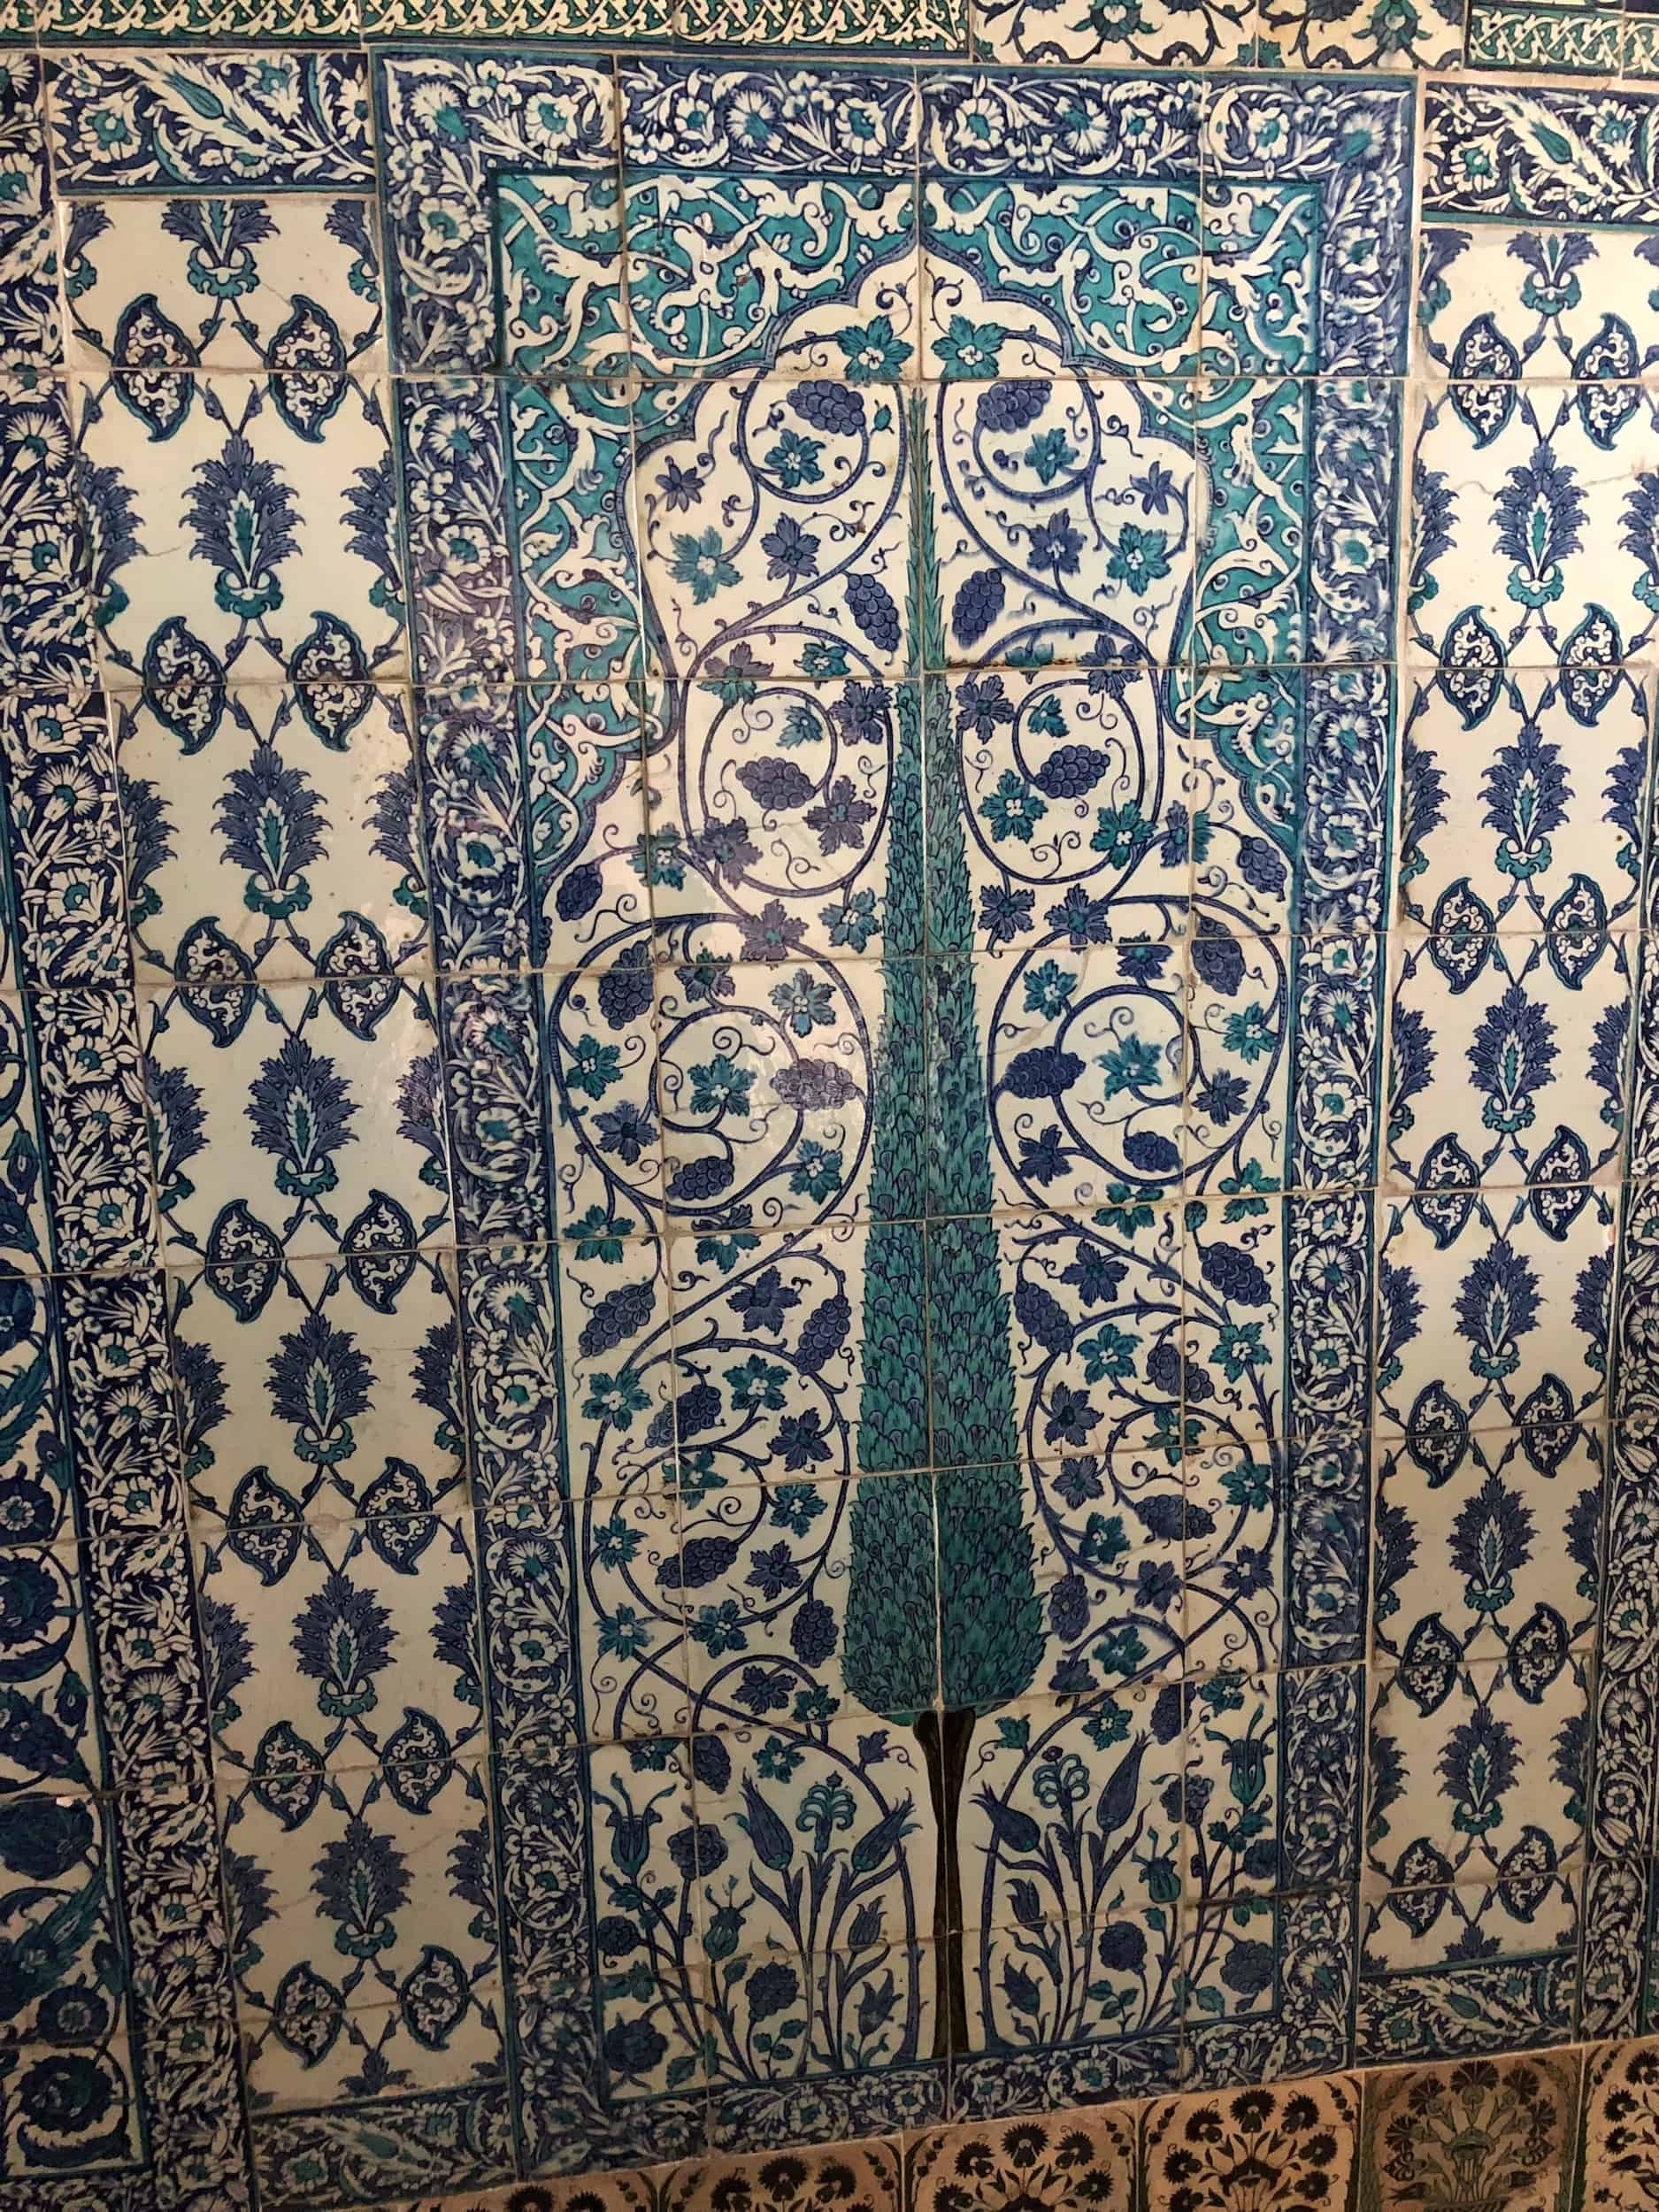 Iznik tiles at the Sultan's Pavilion